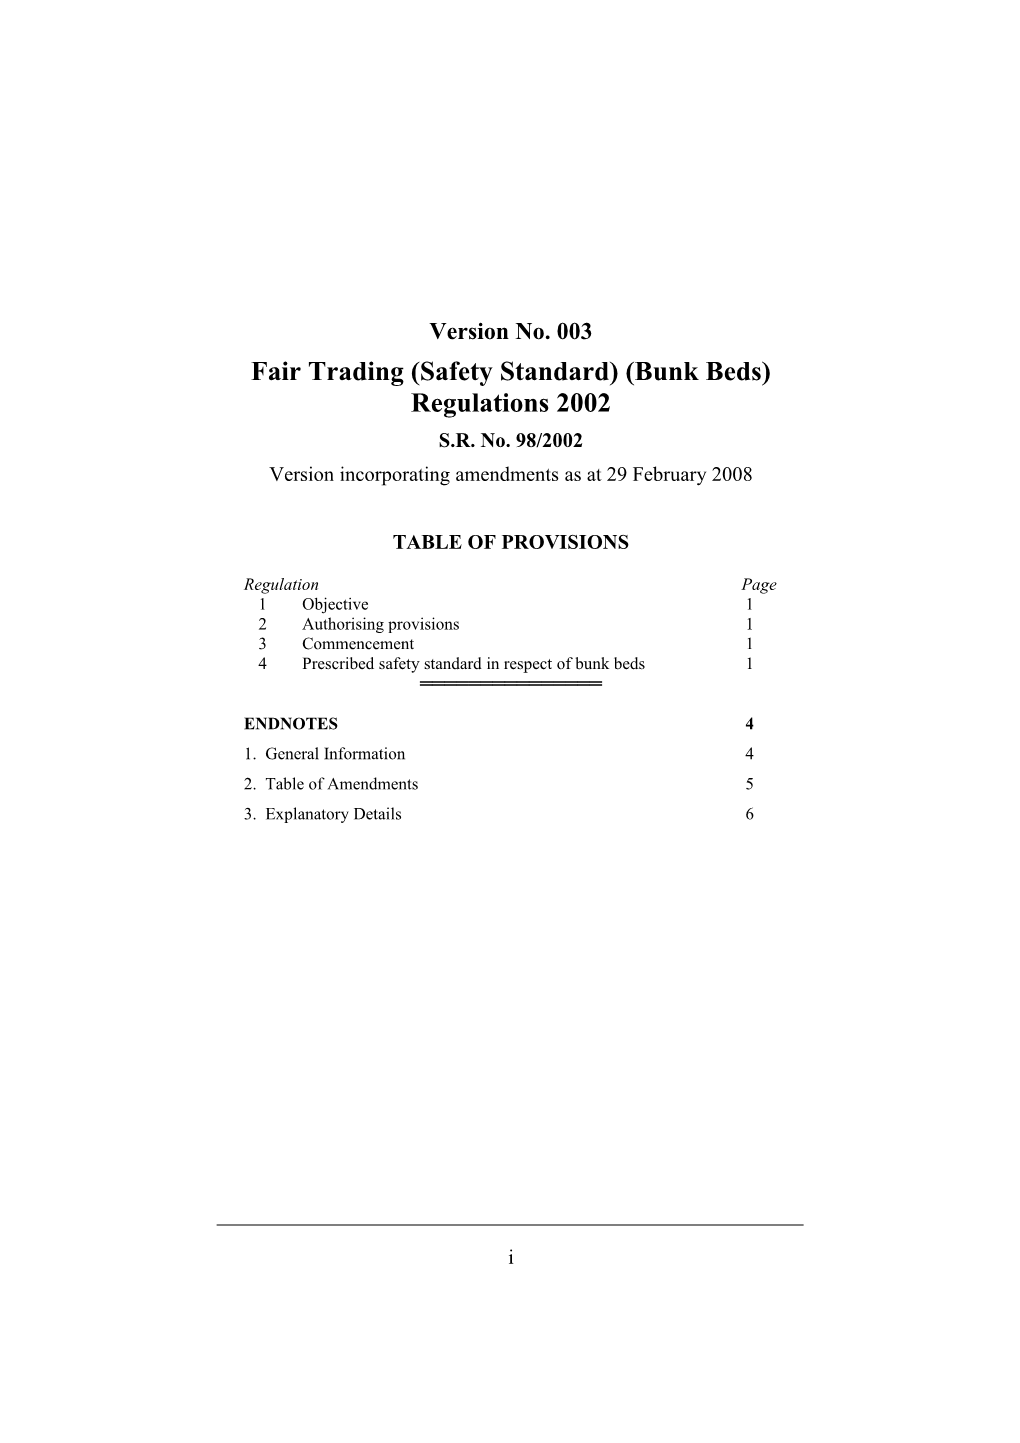 Fair Trading (Safety Standard) (Bunk Beds) Regulations 2002